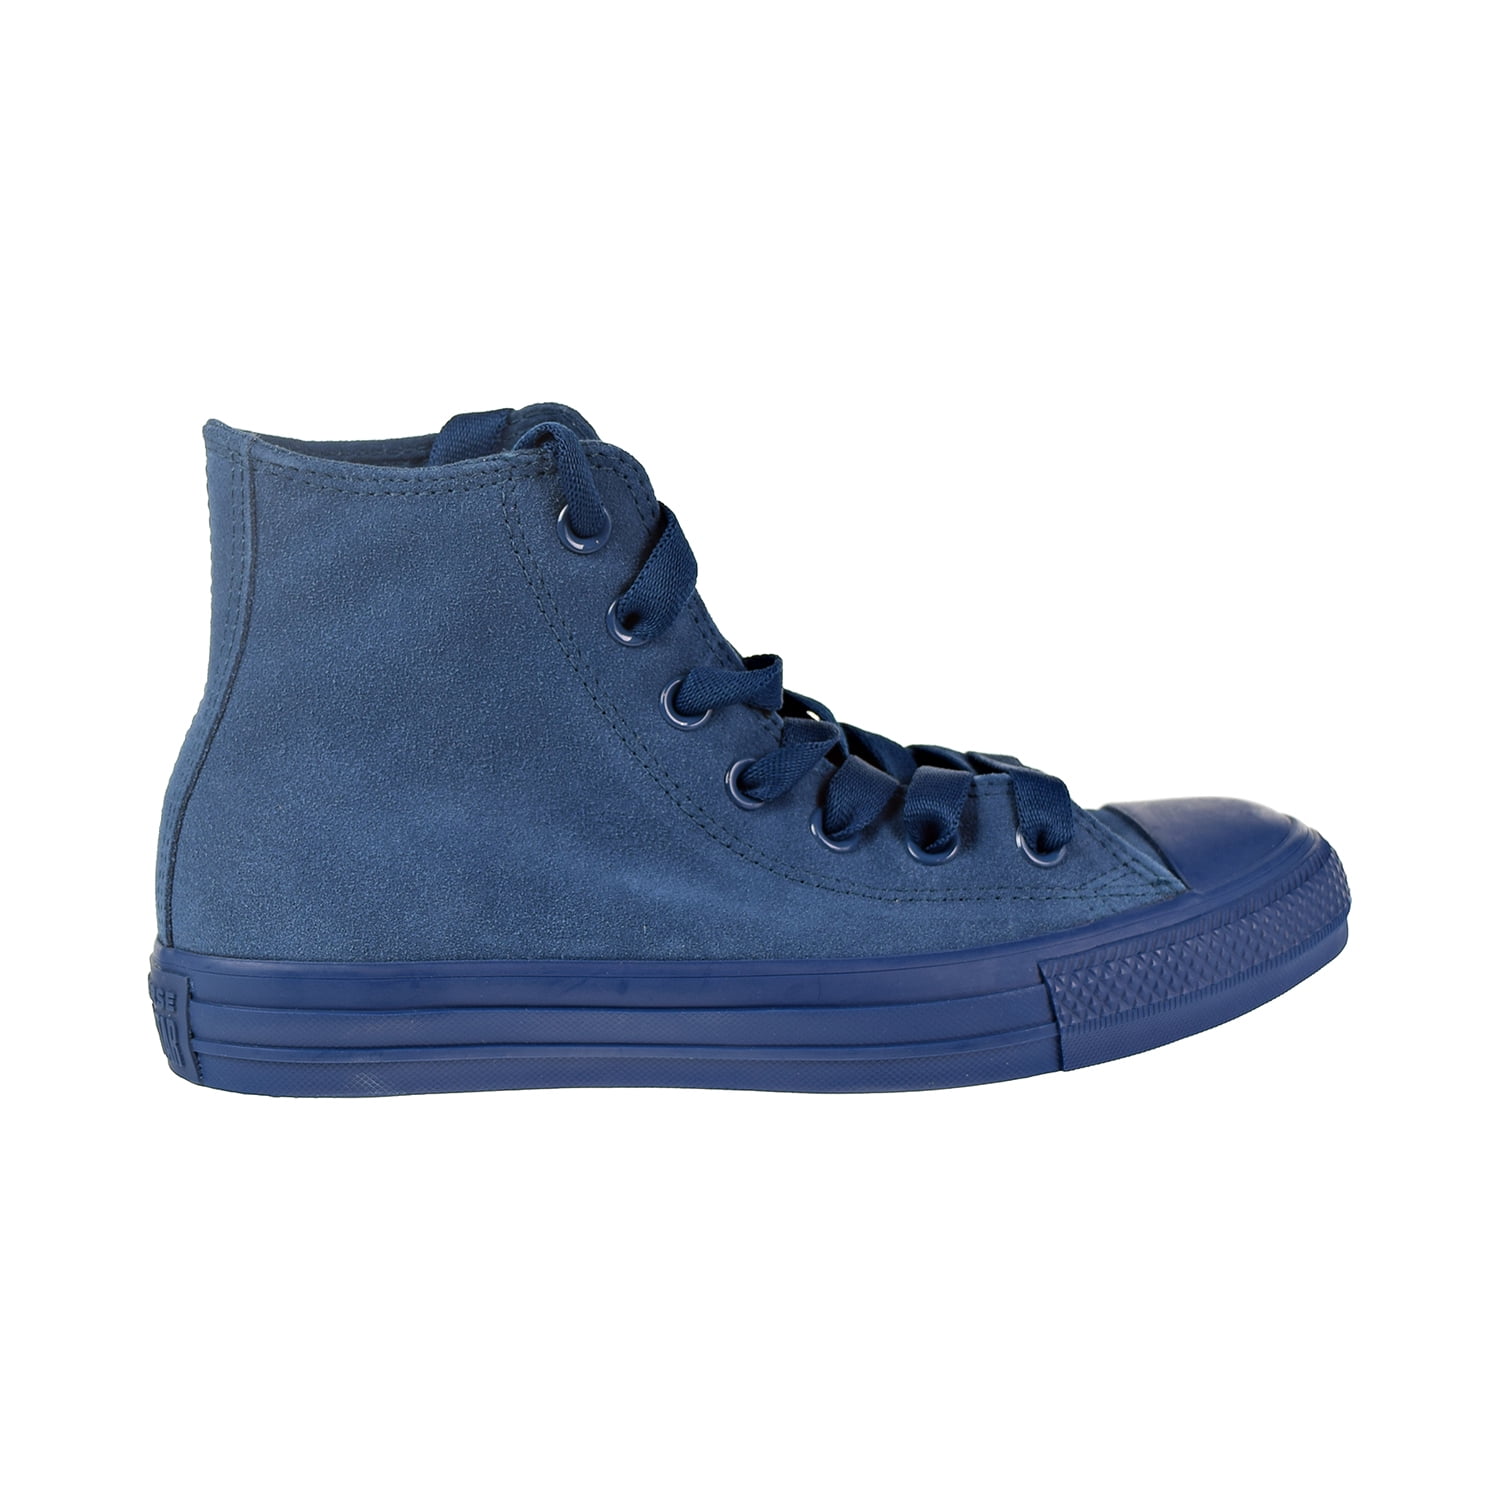 Converse Chuck Taylor All Star Hi Big Kids'/Men's Shoes Blue Fir Suede  162463c 